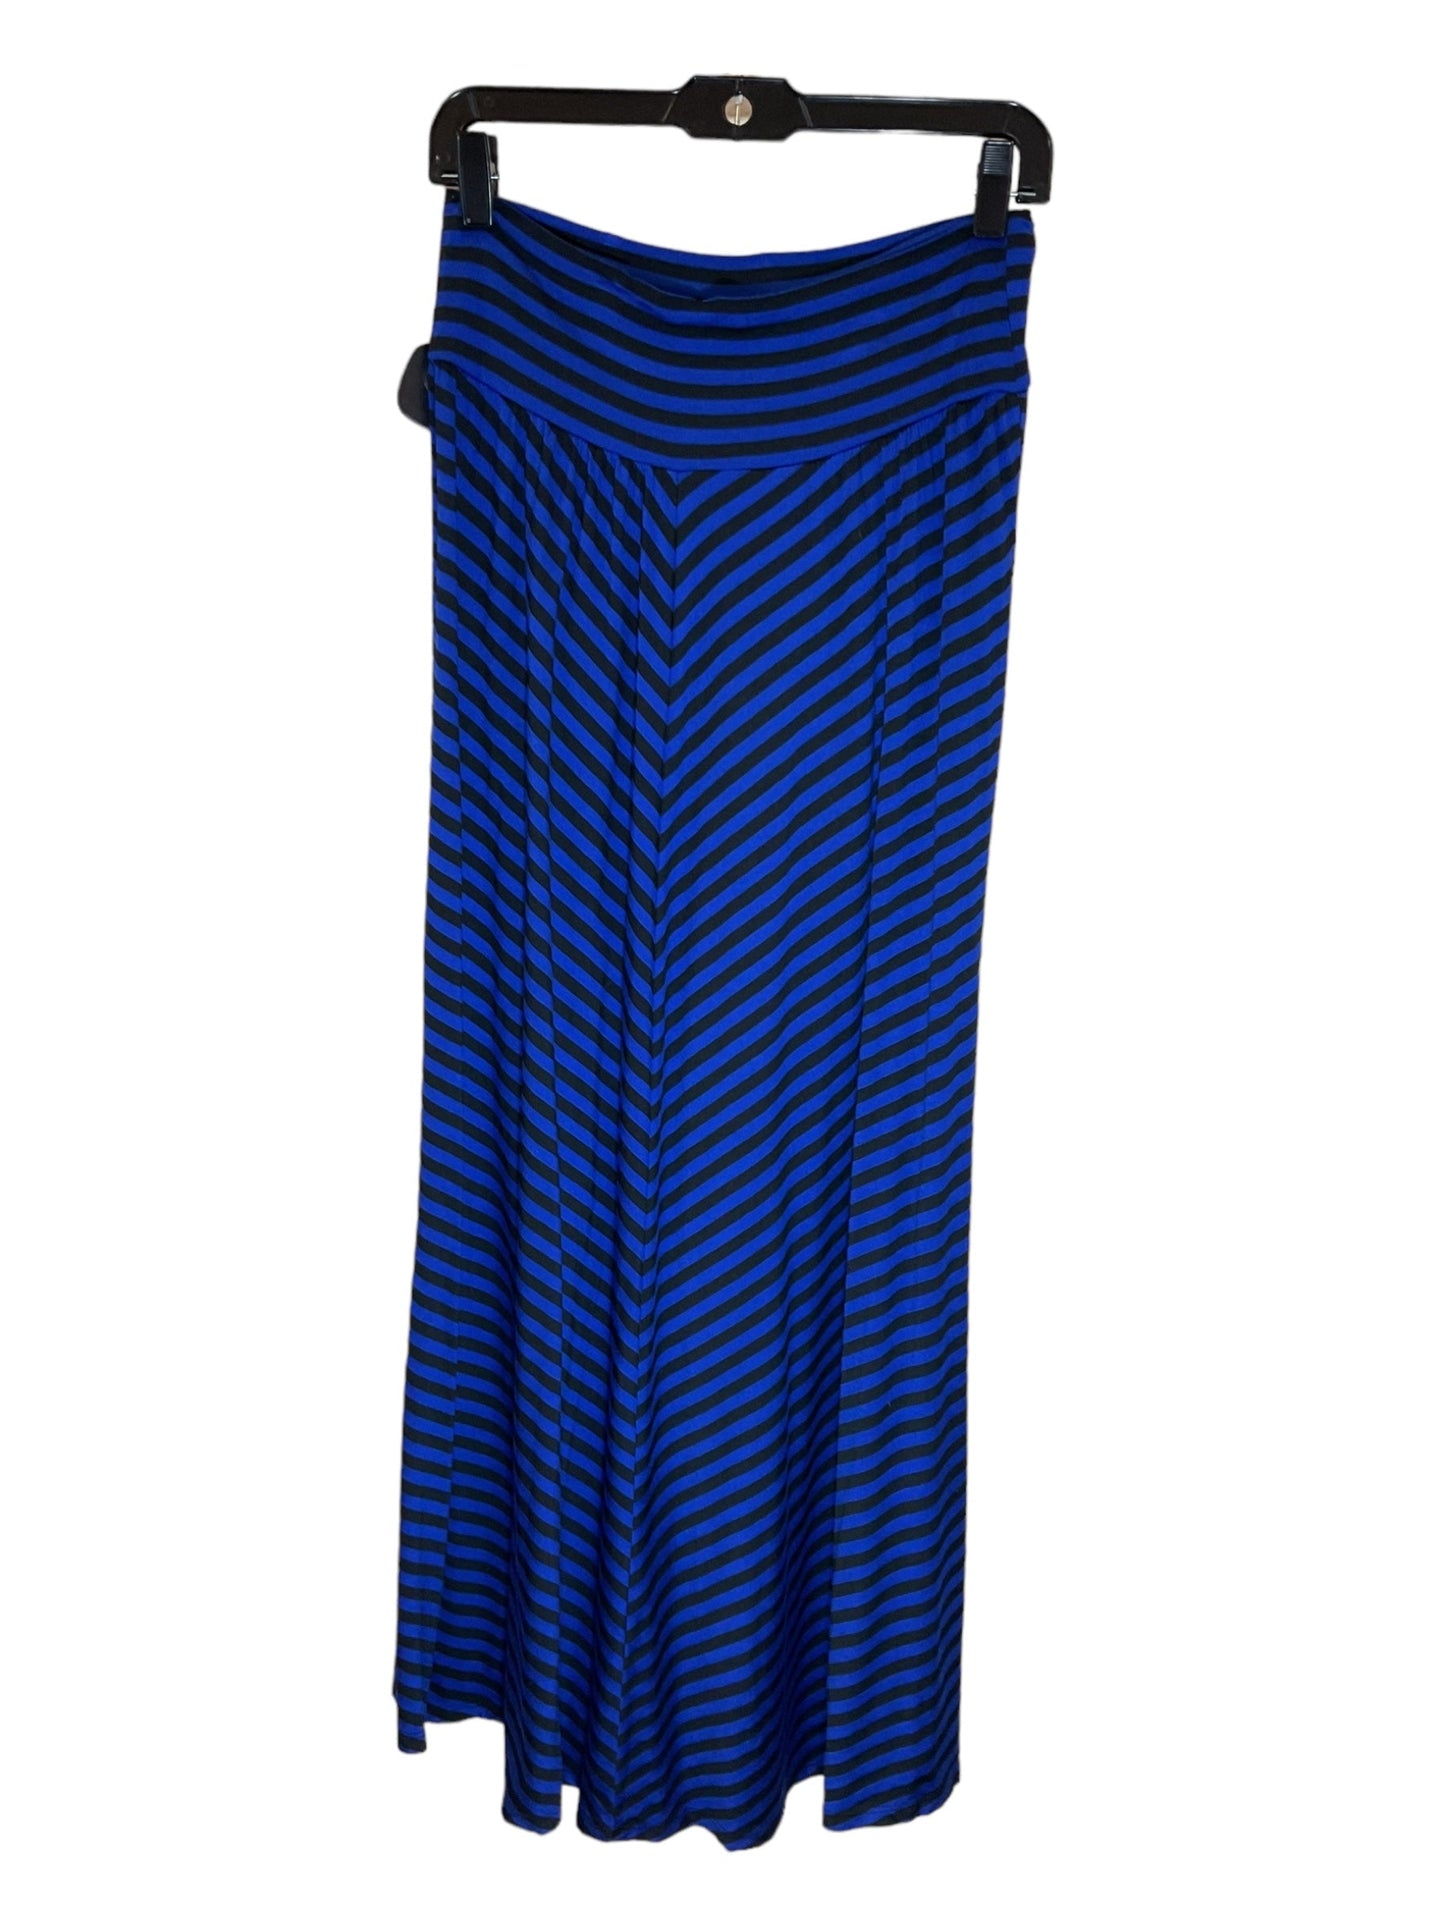 Blue Black Skirt Maxi Agb, Size 1x